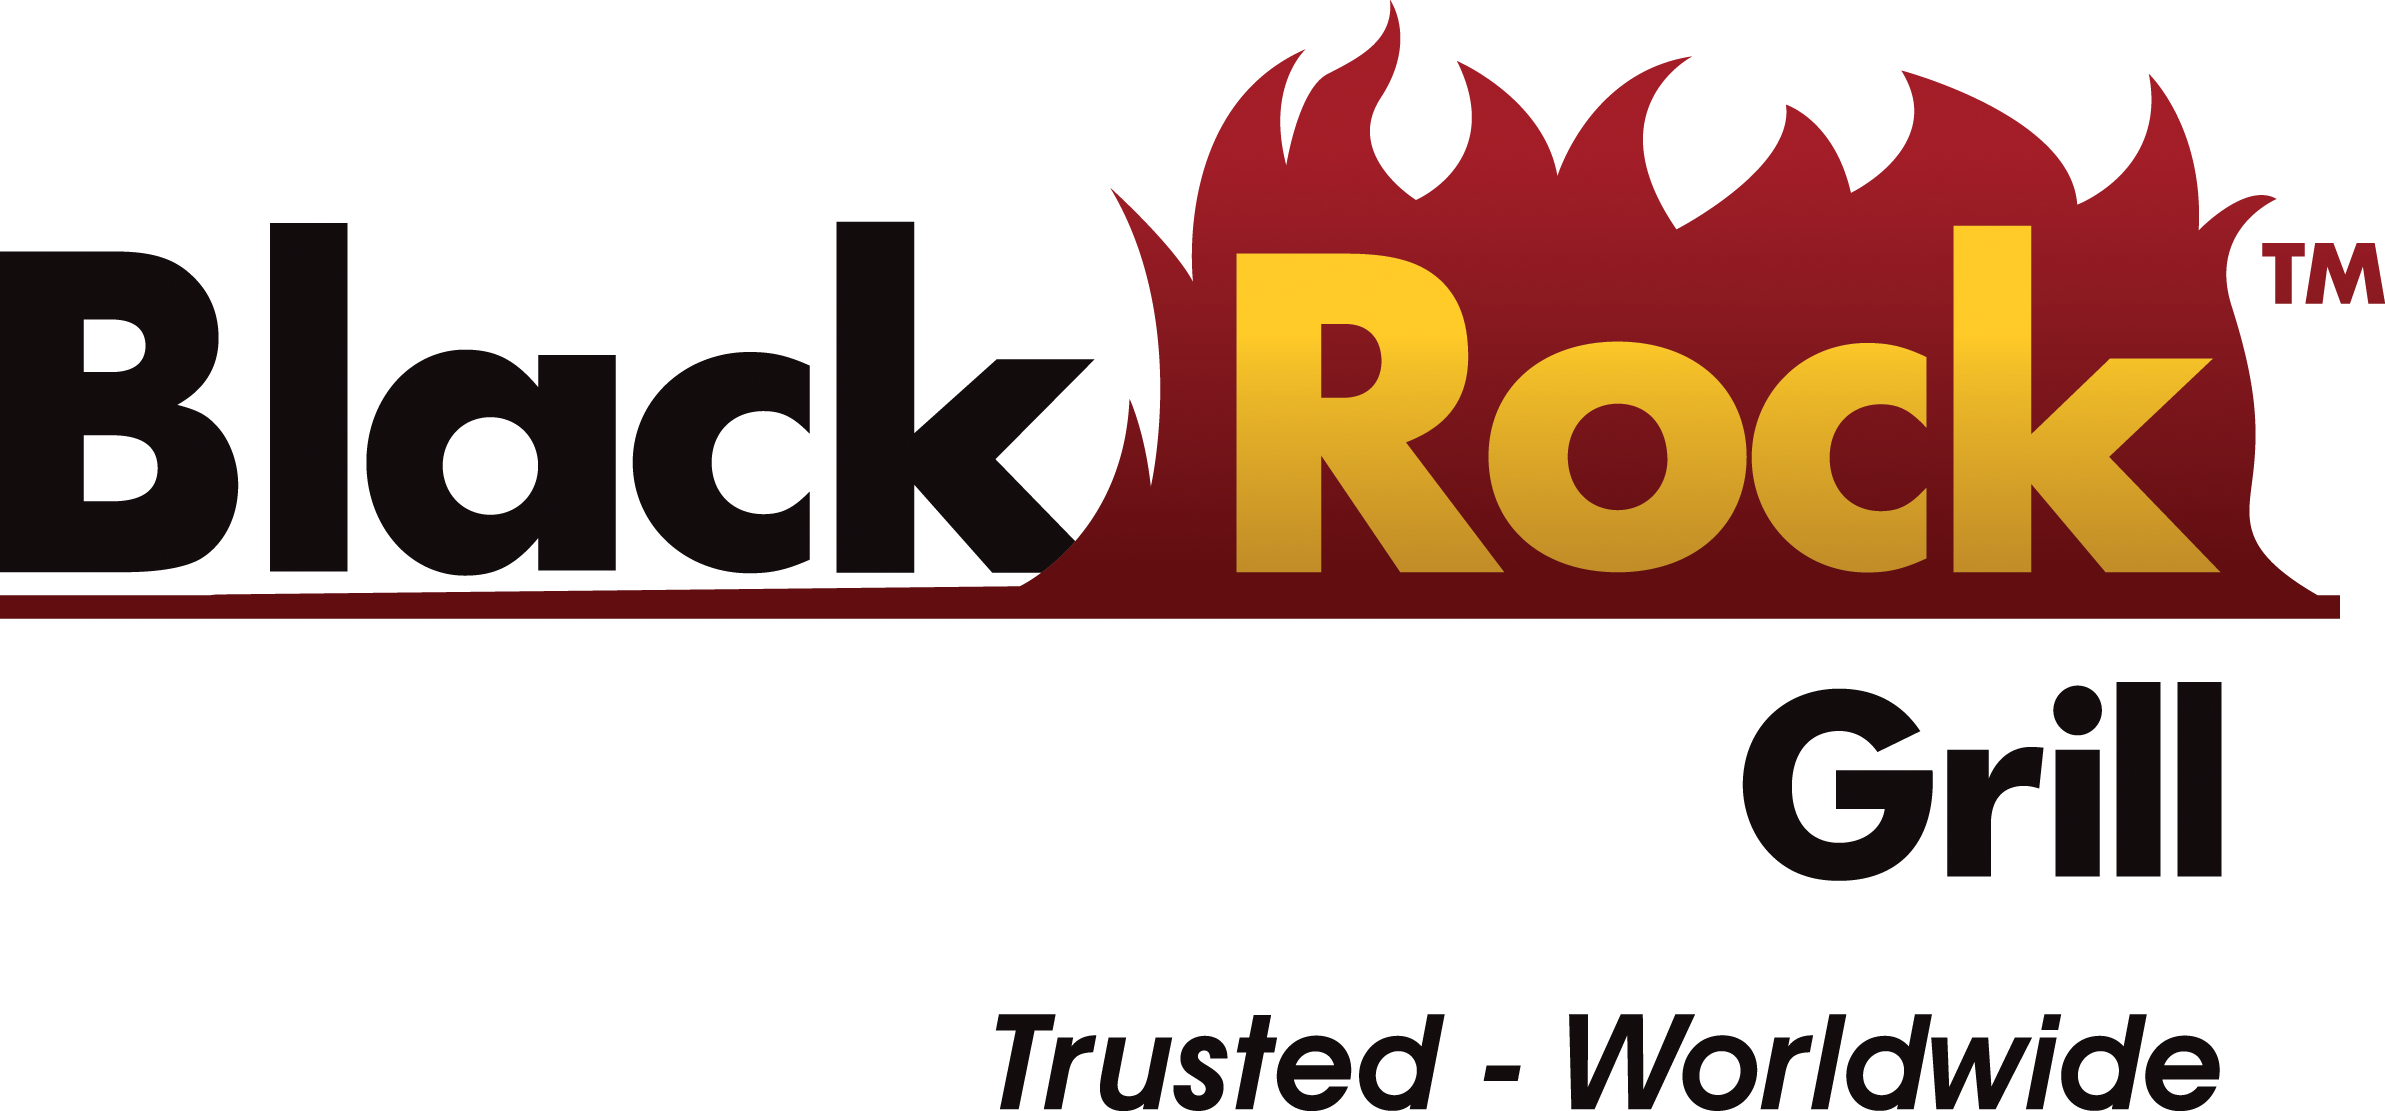 Black Rock Grill Discount Code